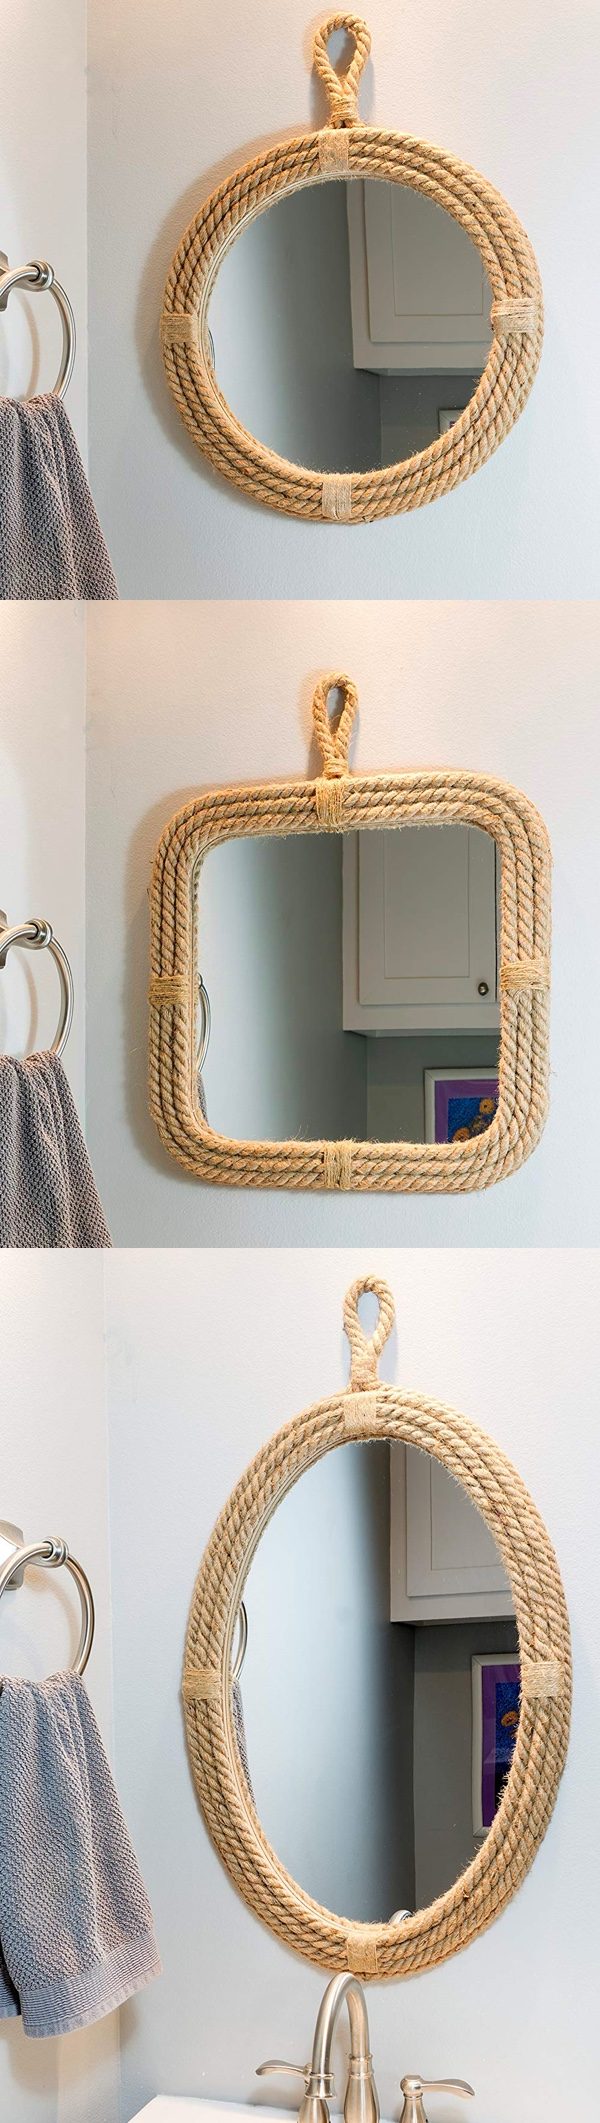 BESPORTBLE Bathroom Mirror Hanging Makeup Mirror Retro Wall Mirror Vanity Mirror for Home Bedroom Living Room 